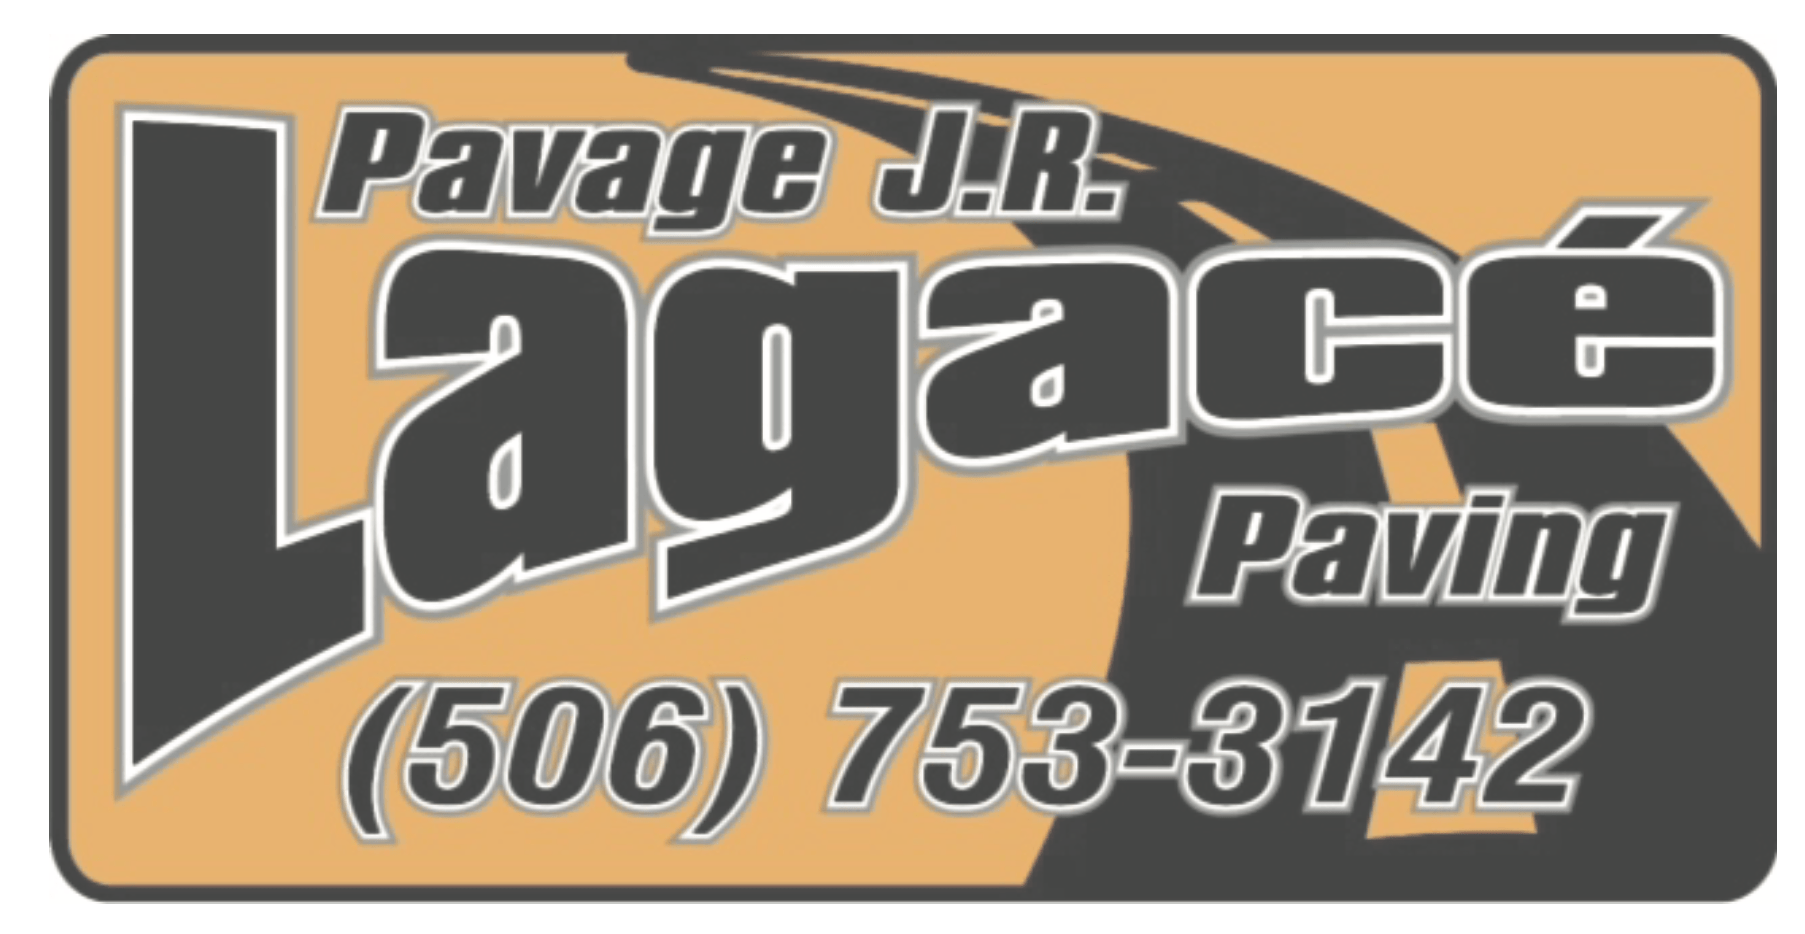 Pavage JR Lagace Paving